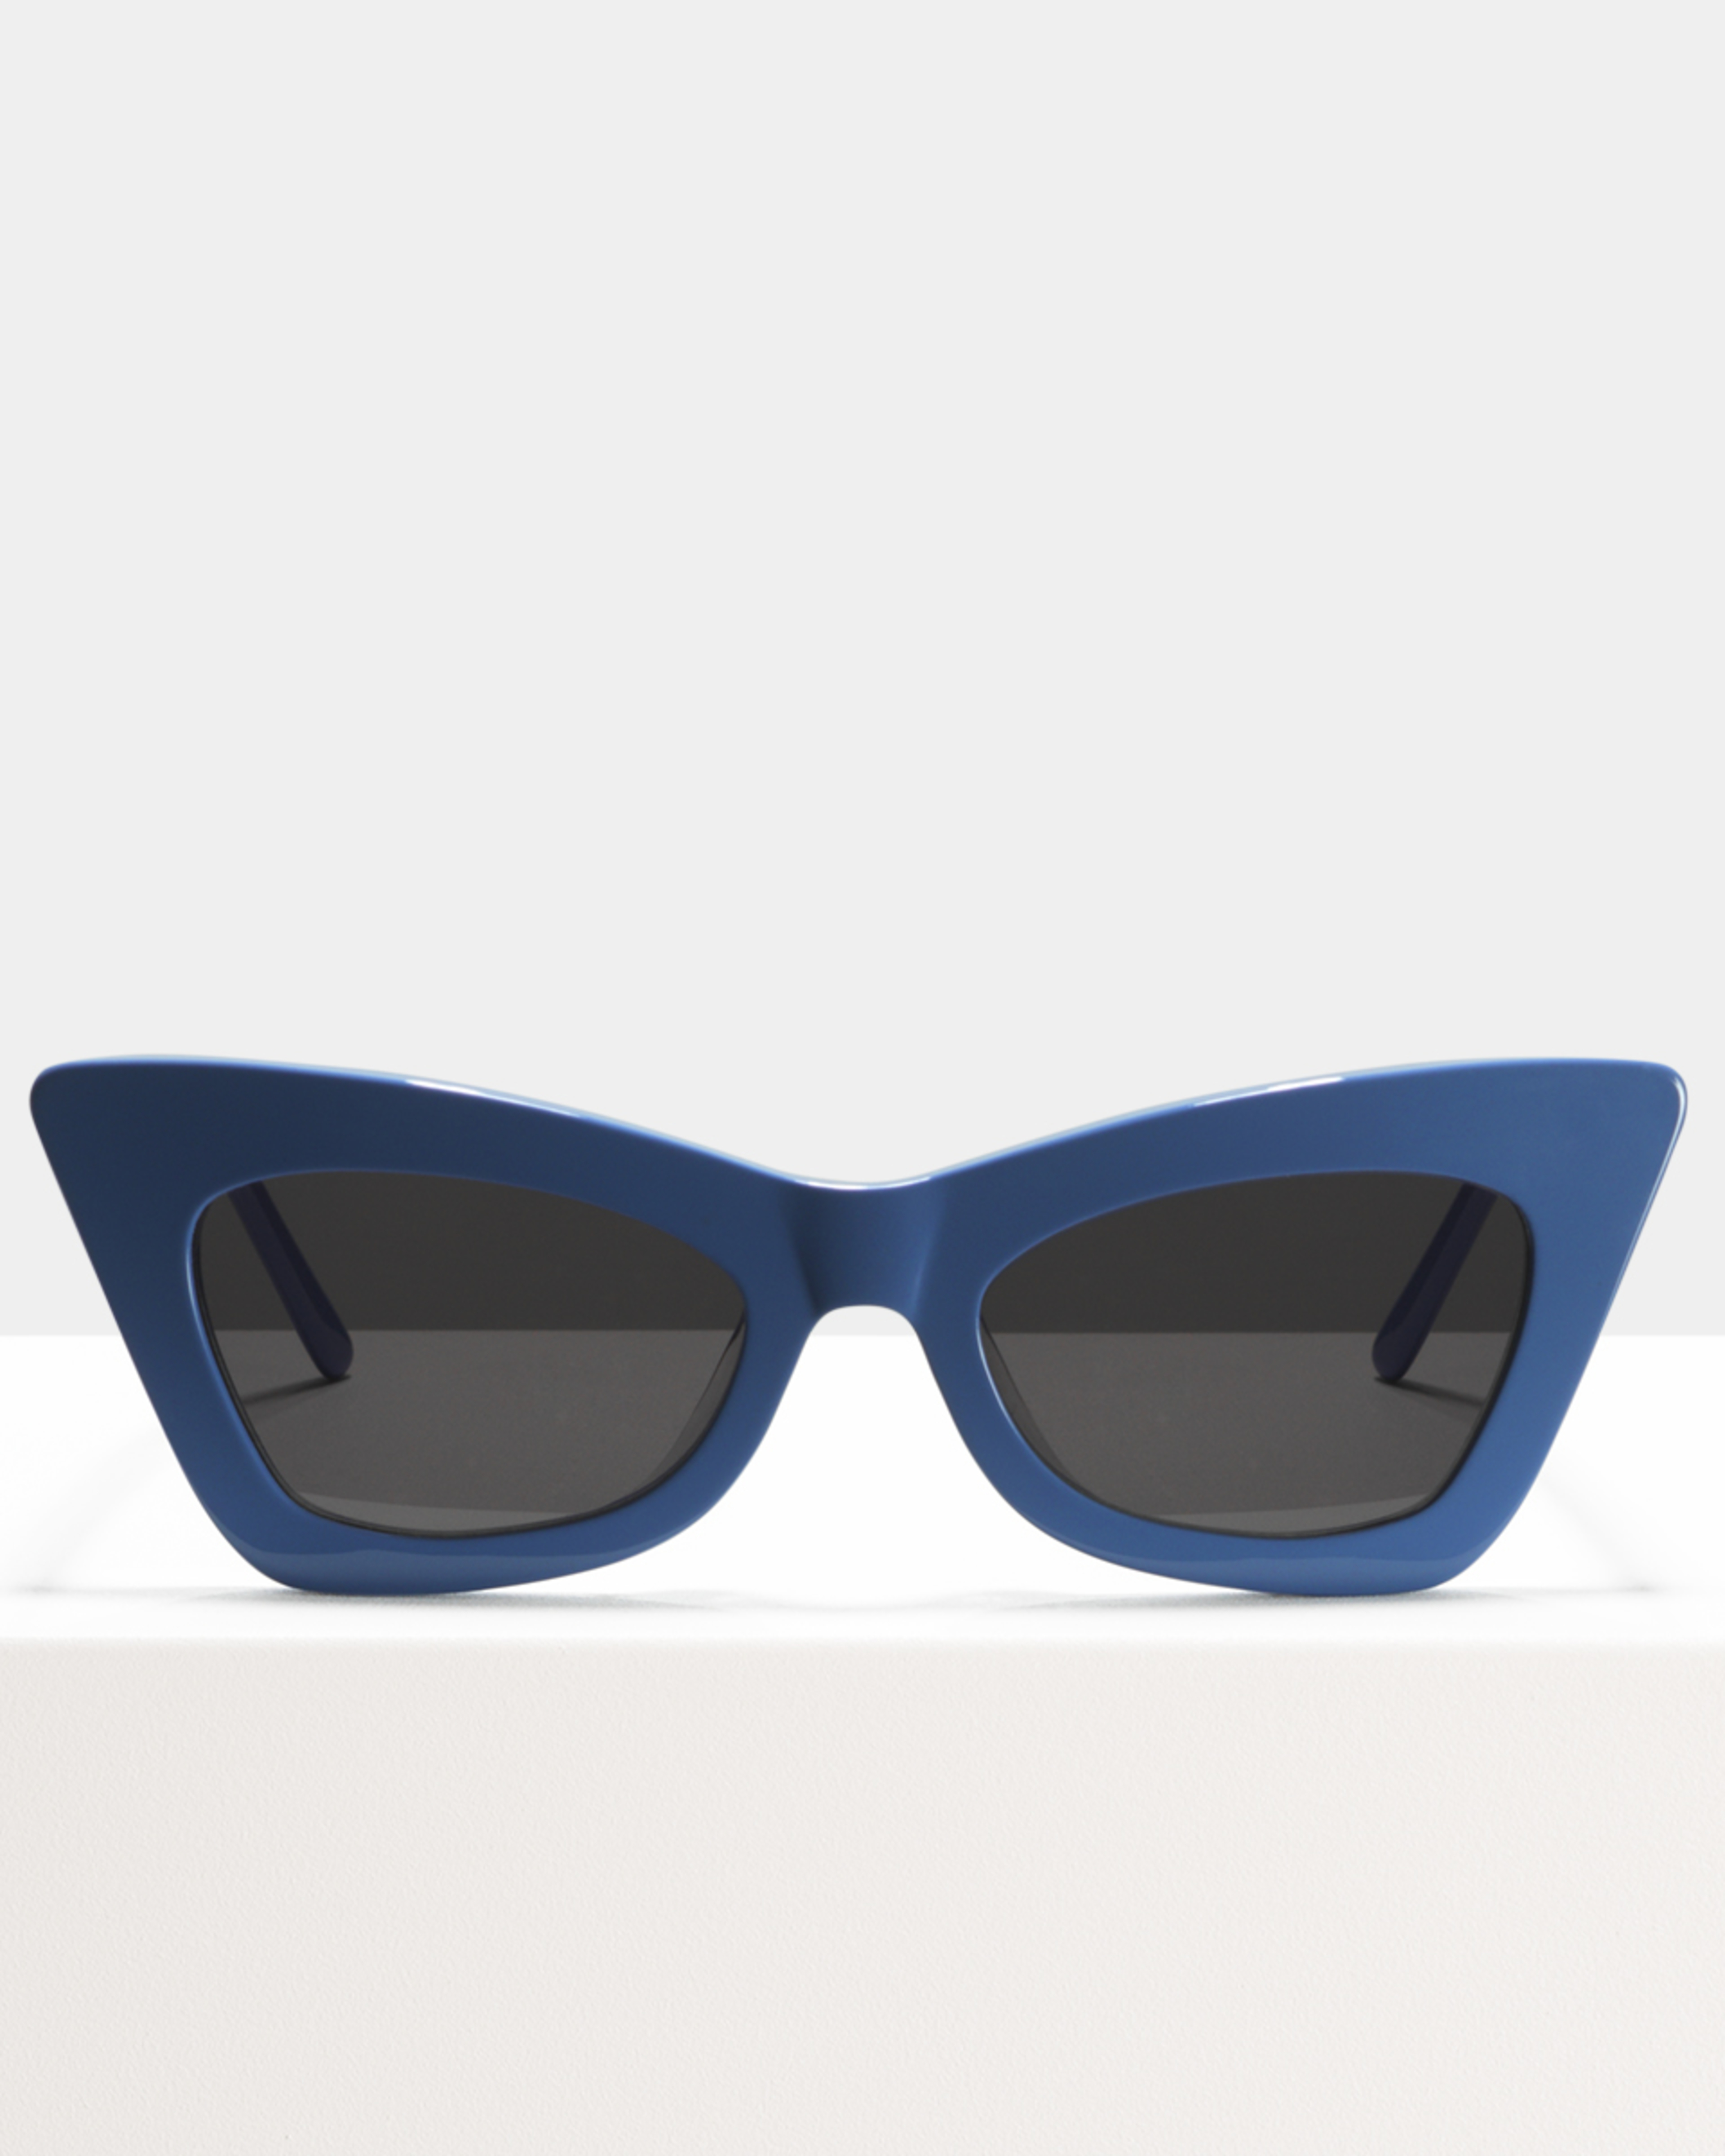 Ace & Tate Sunglasses |  Acetat in Blau